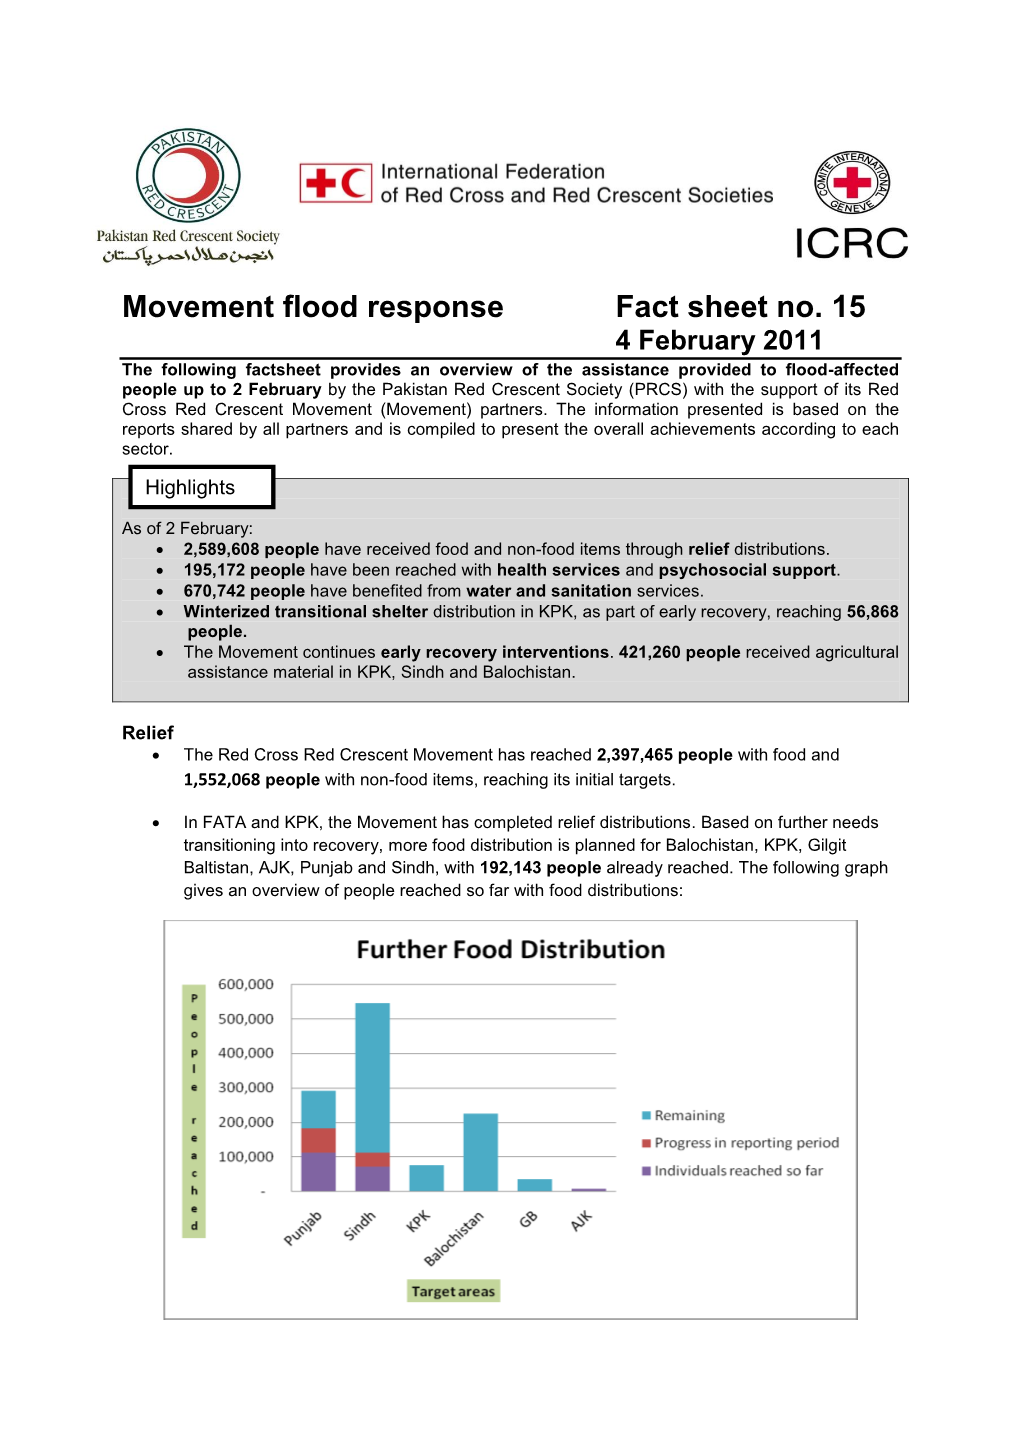 Movement Flood Response Fact Sheet No. 15